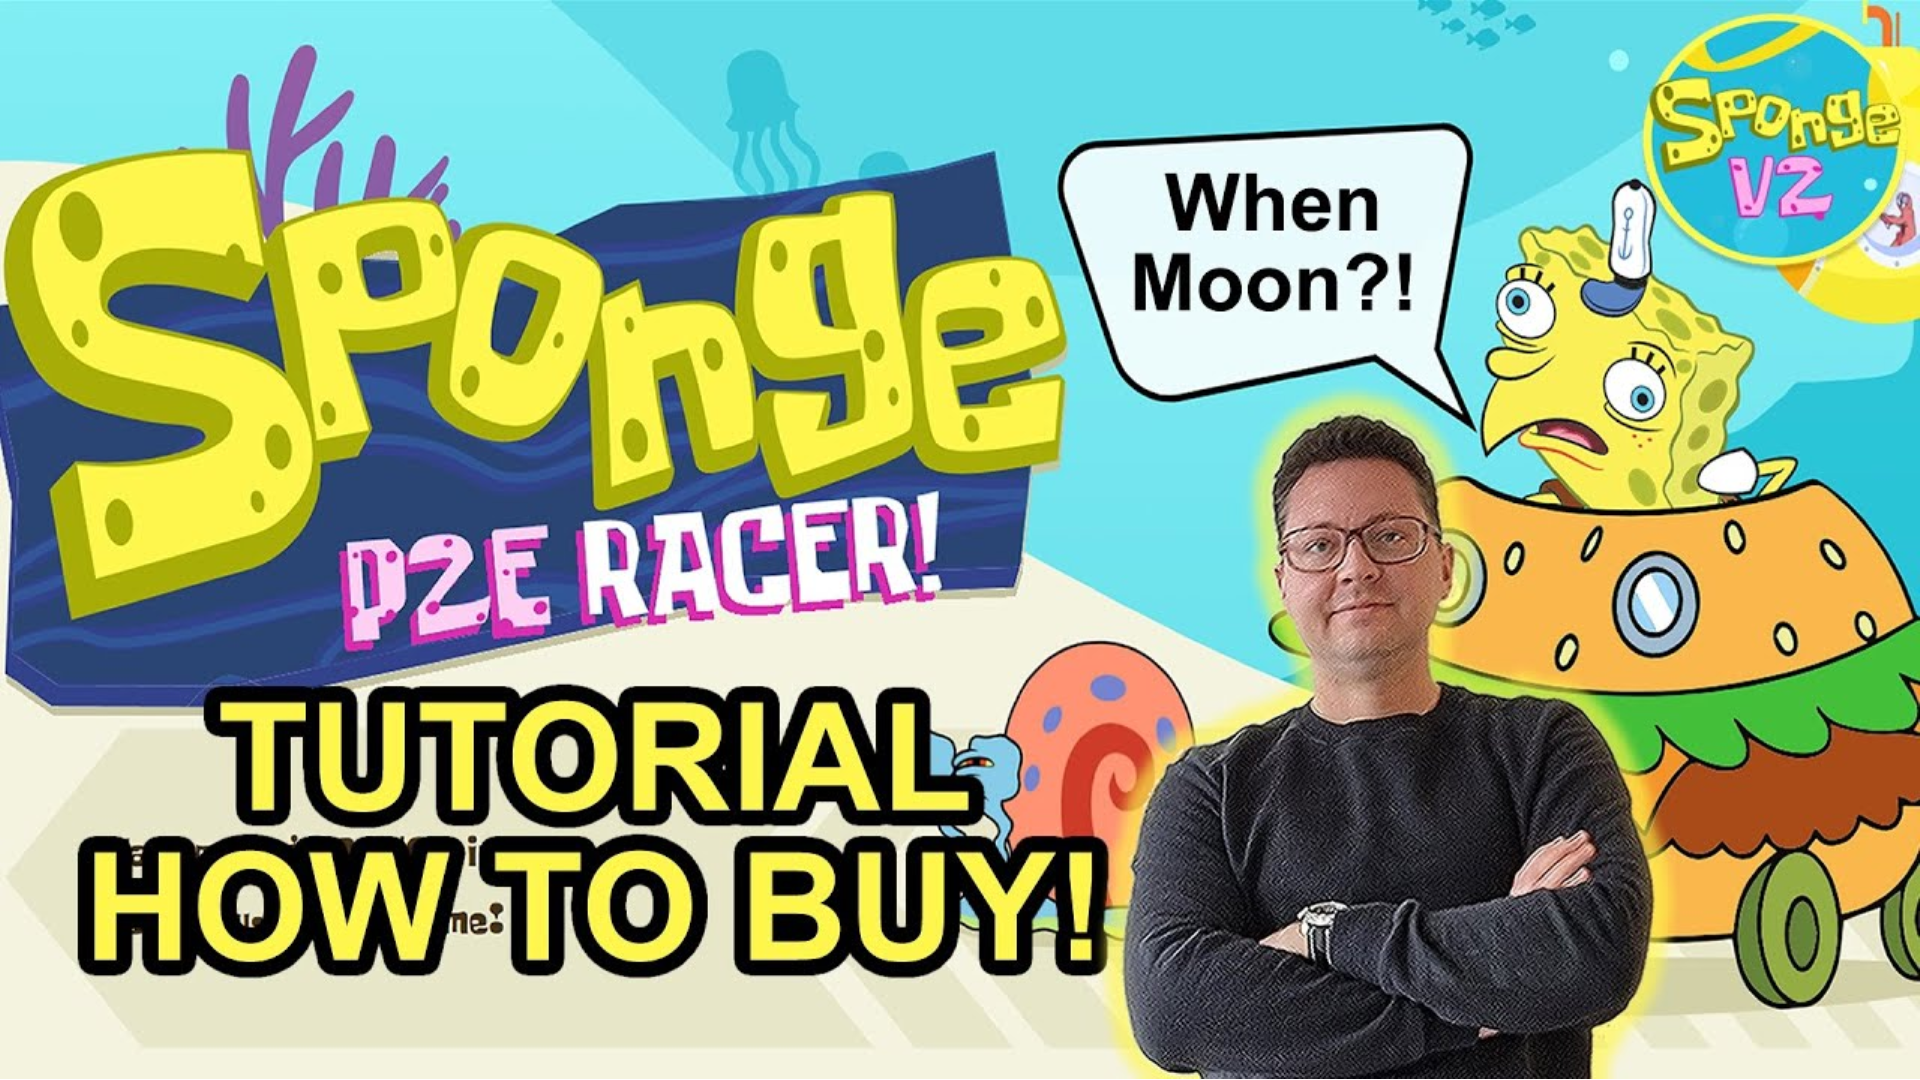 How to Buy Sponge V2 On Presale Alessandro De Crypto Video Review